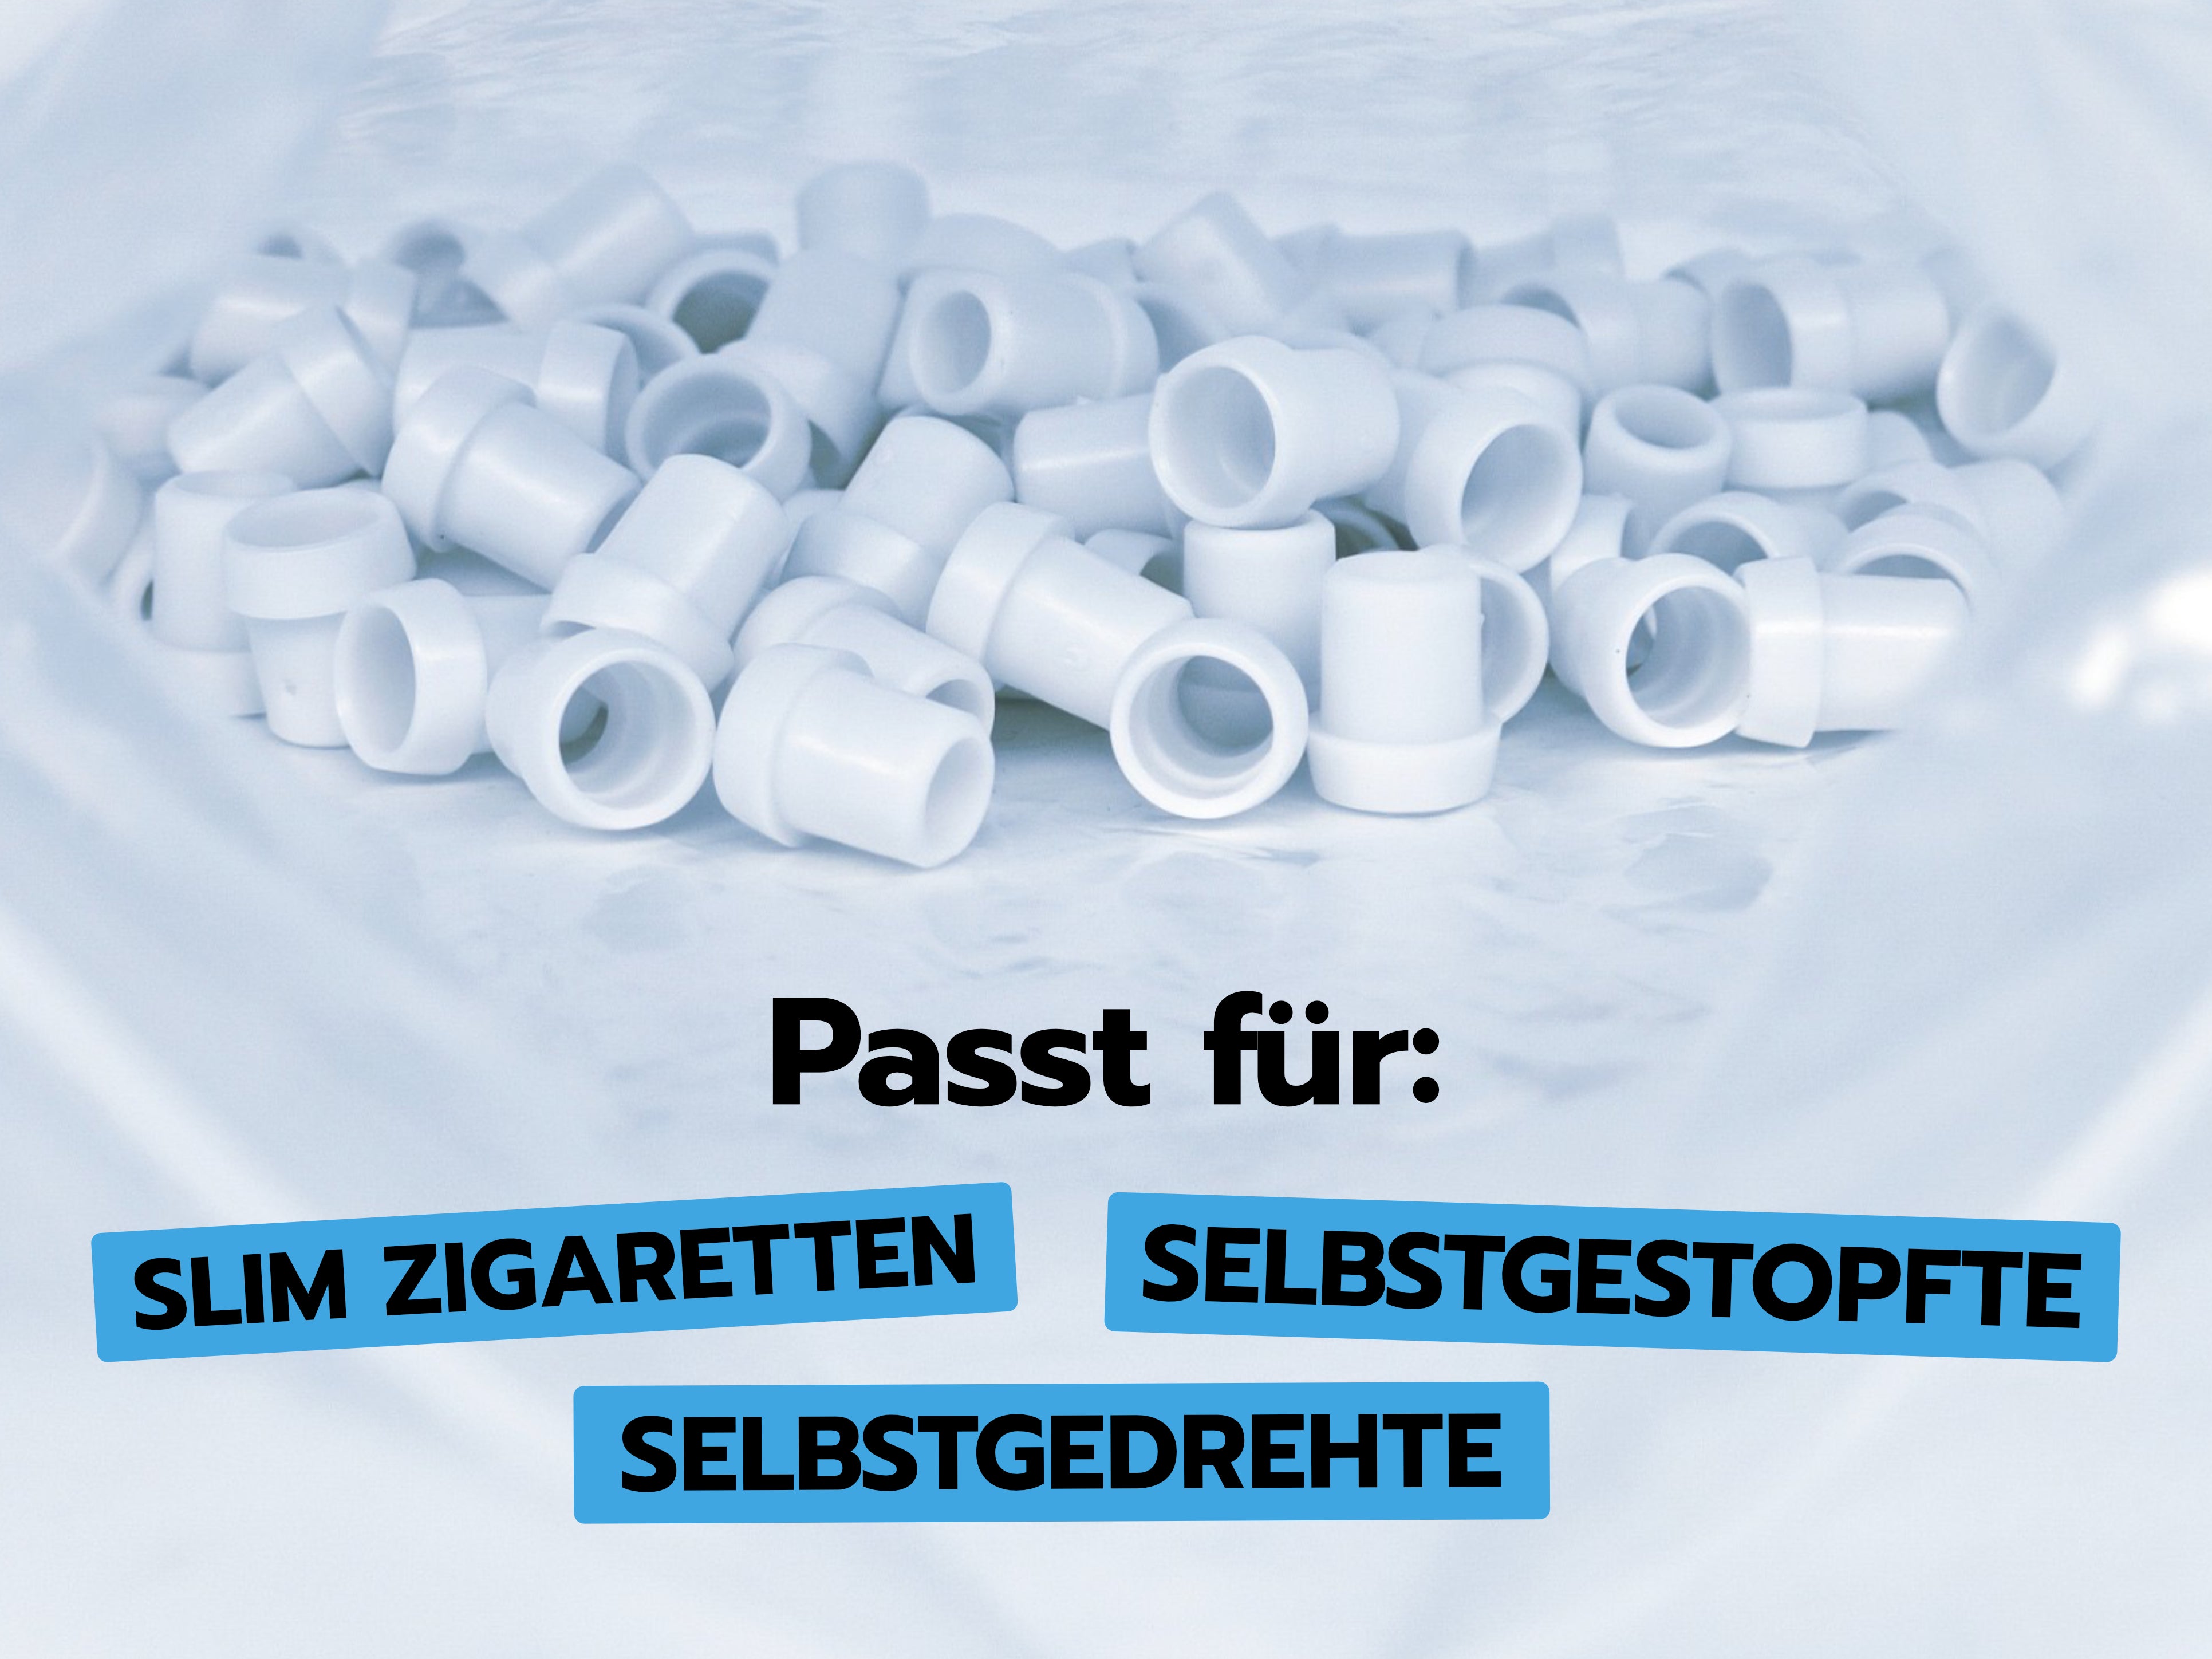 BetterSmoke, Anti- Teer- Filter, 100 Stück in Hessen - Schwalmstadt